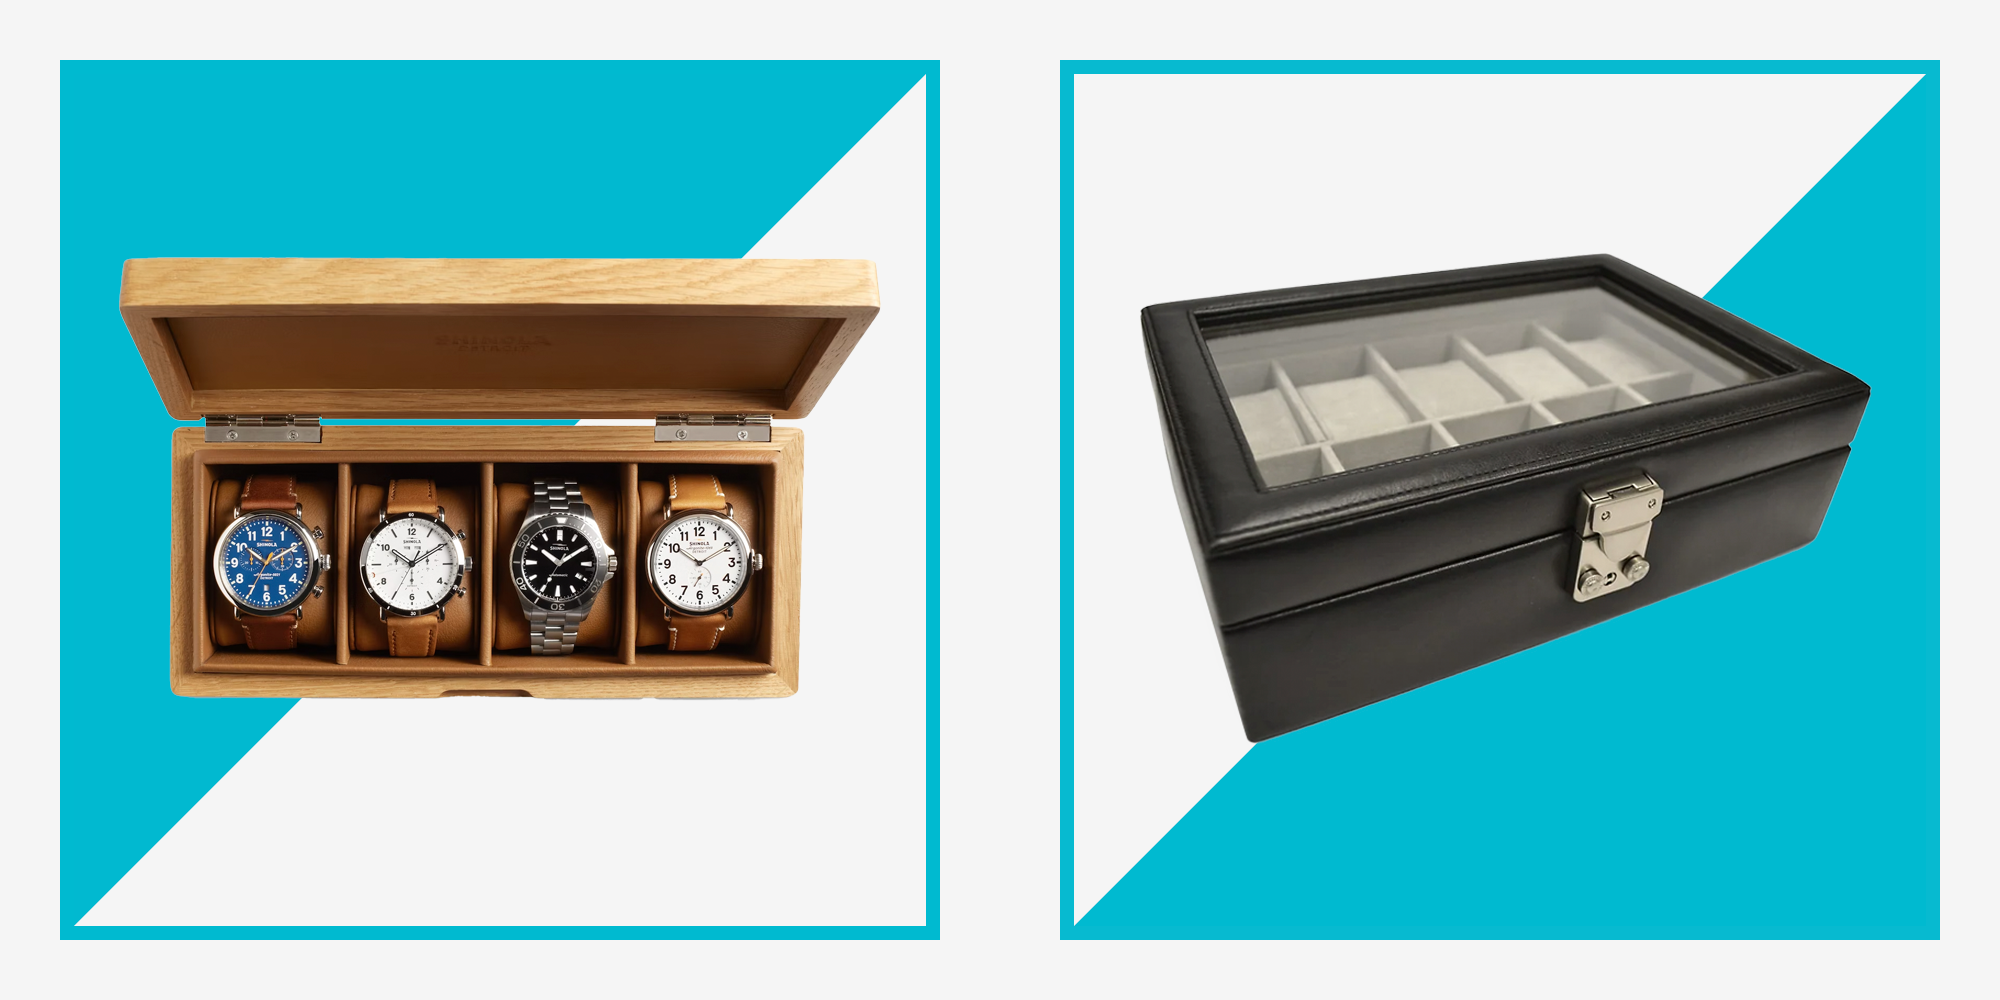 Watch Storage Boxes, Luxury Watch Box